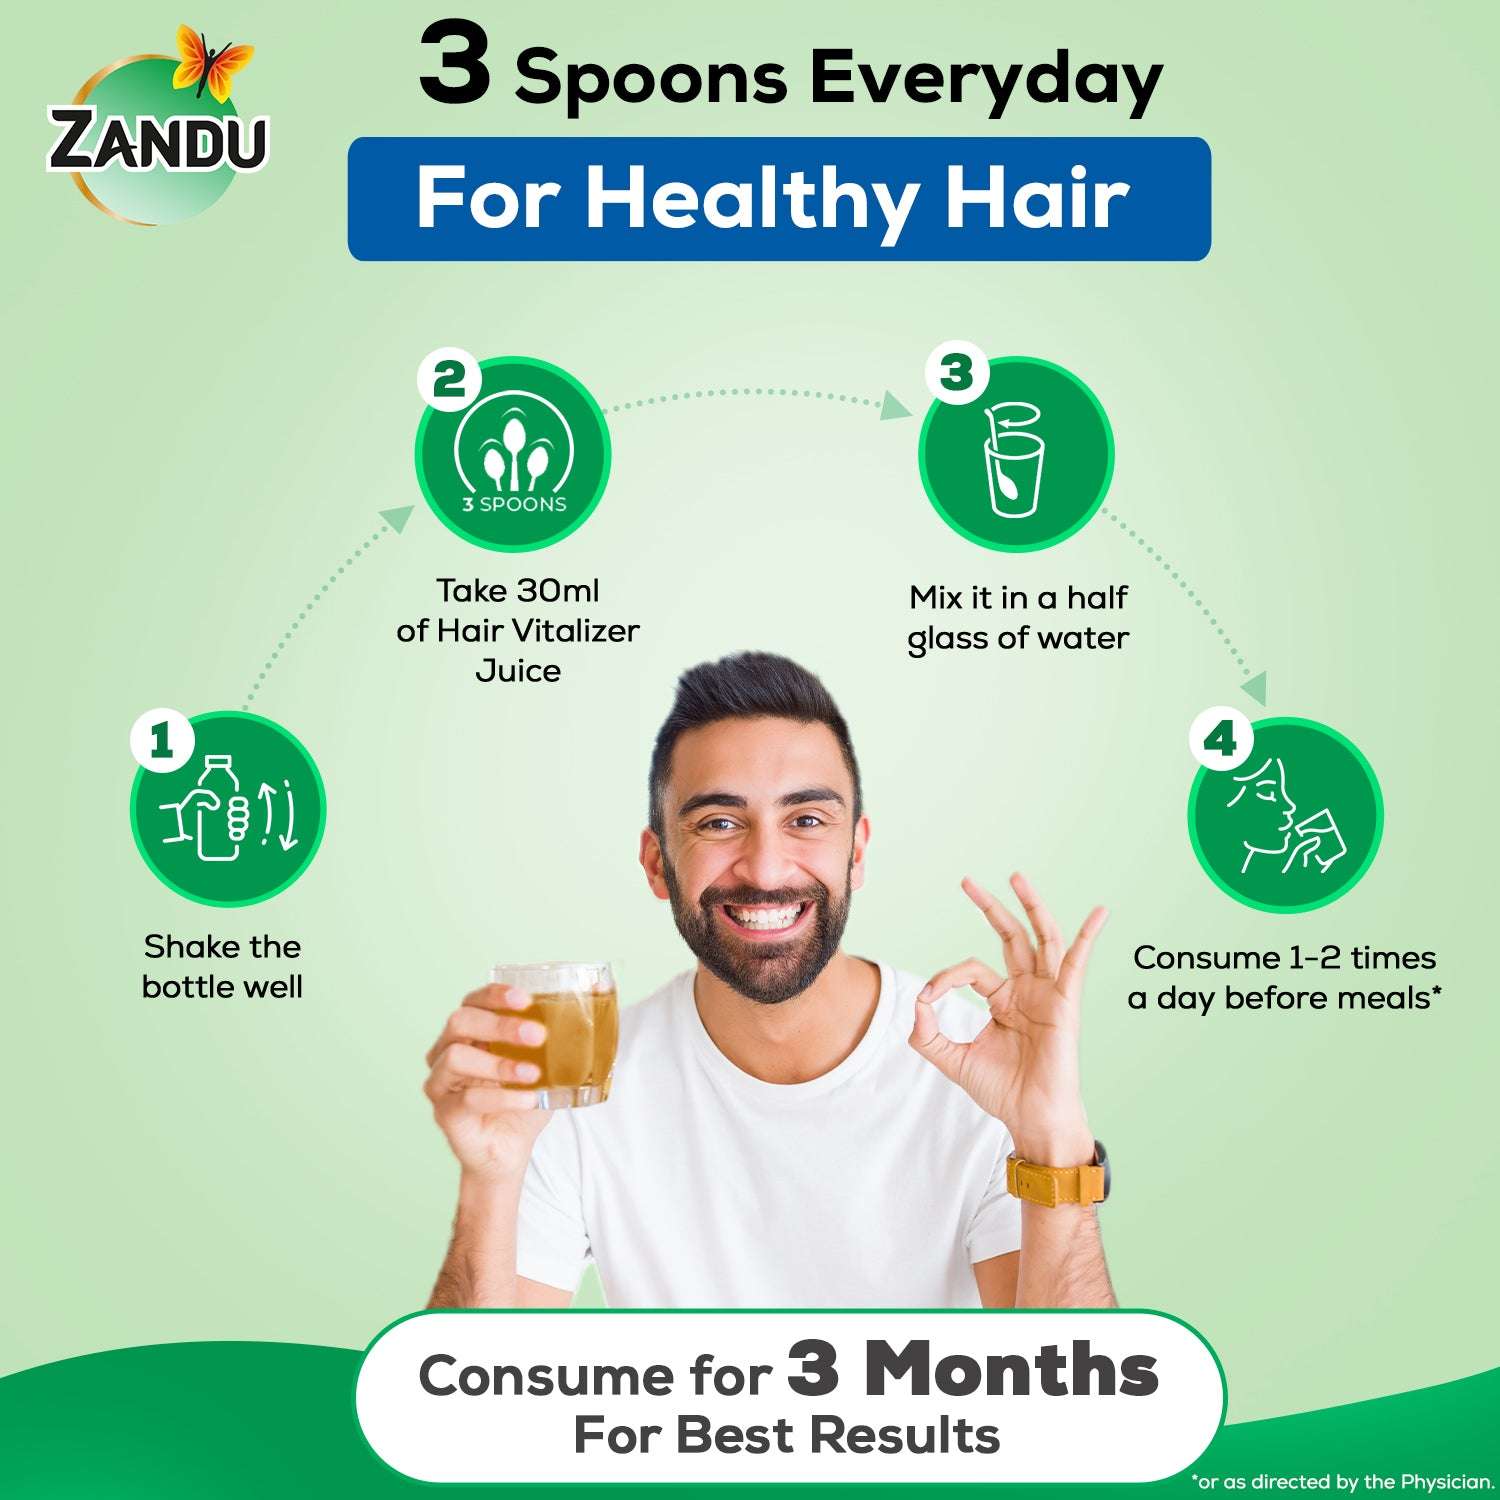 How to use Zandu Hair Vitalizer Juice